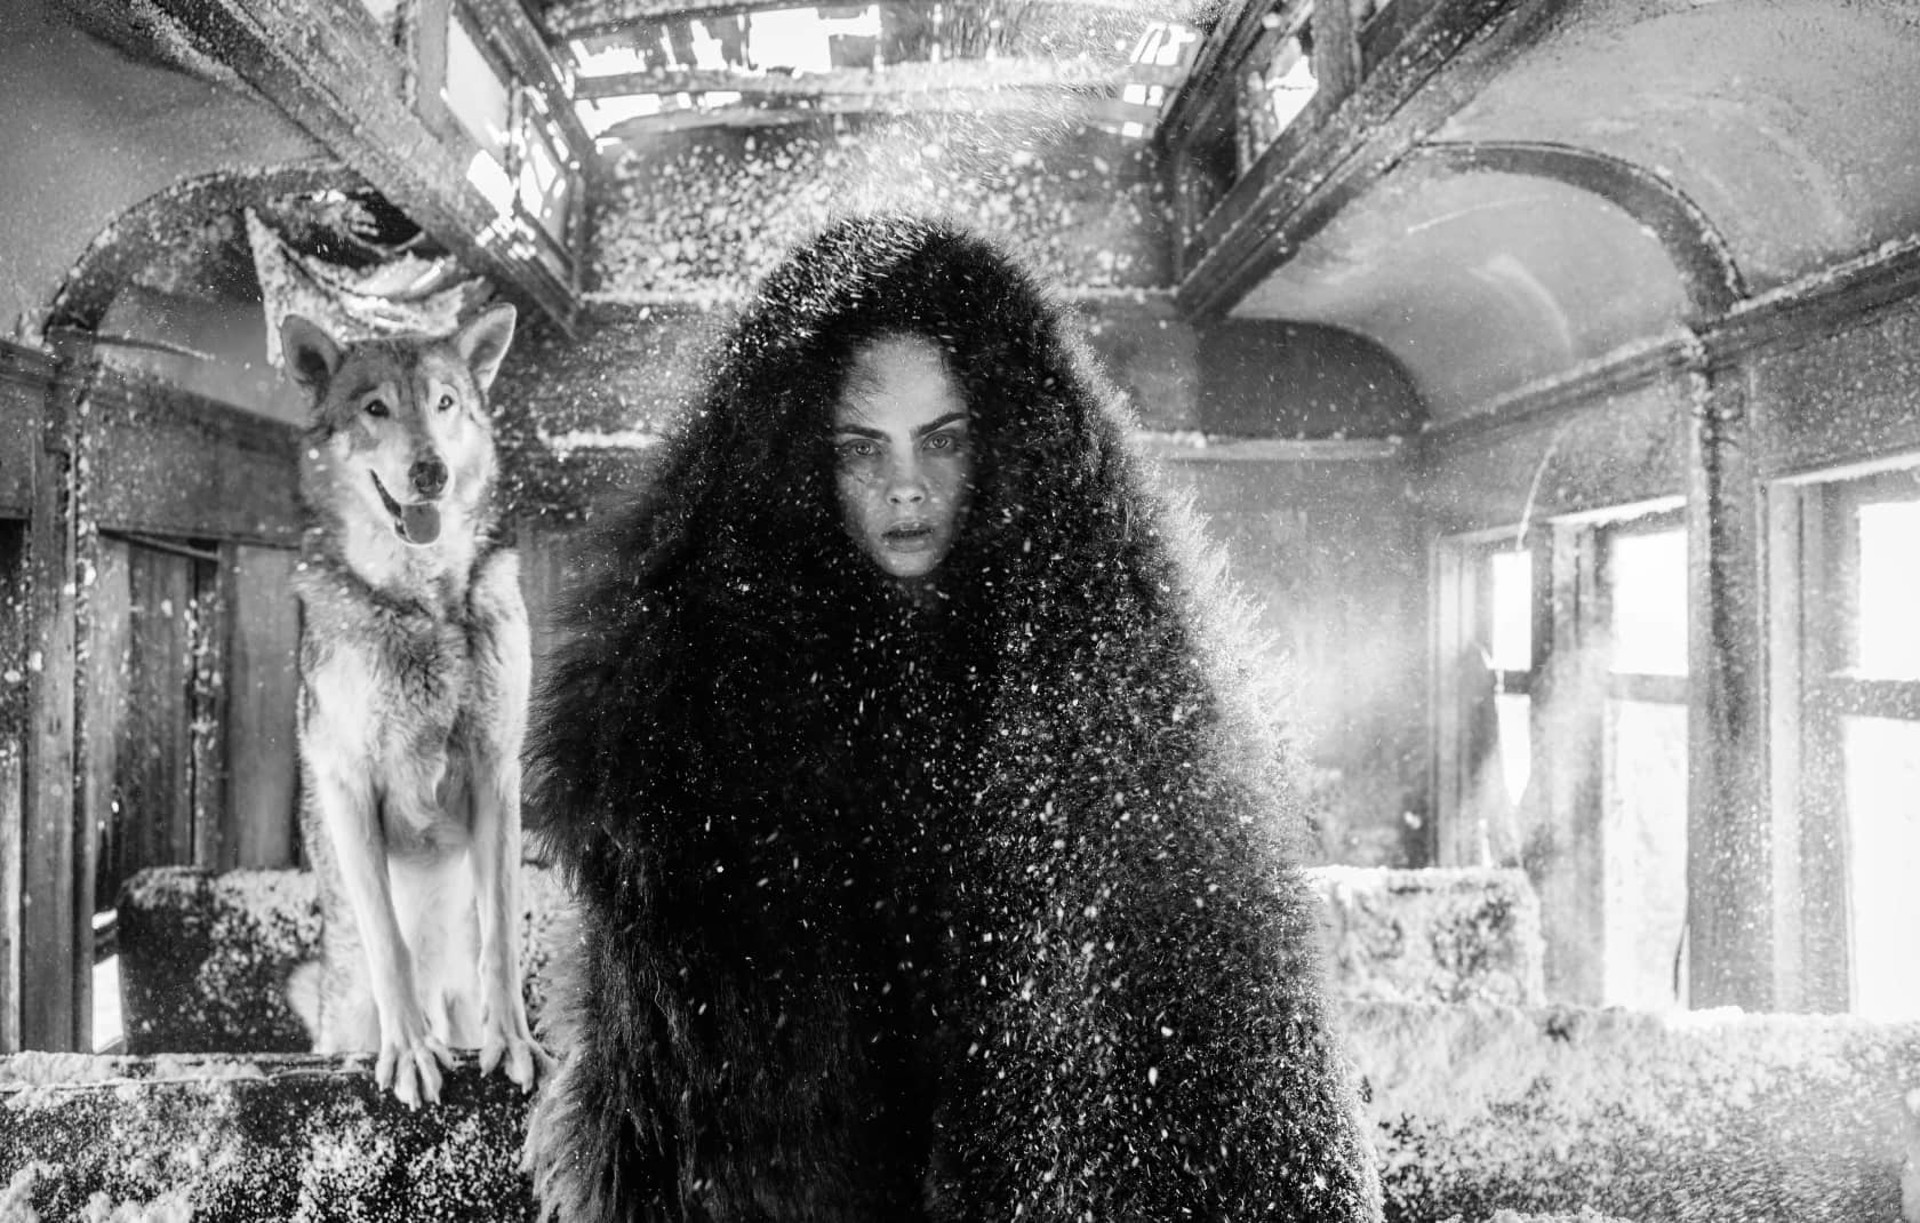 The Girl Who Cried Wolf by David Yarrow